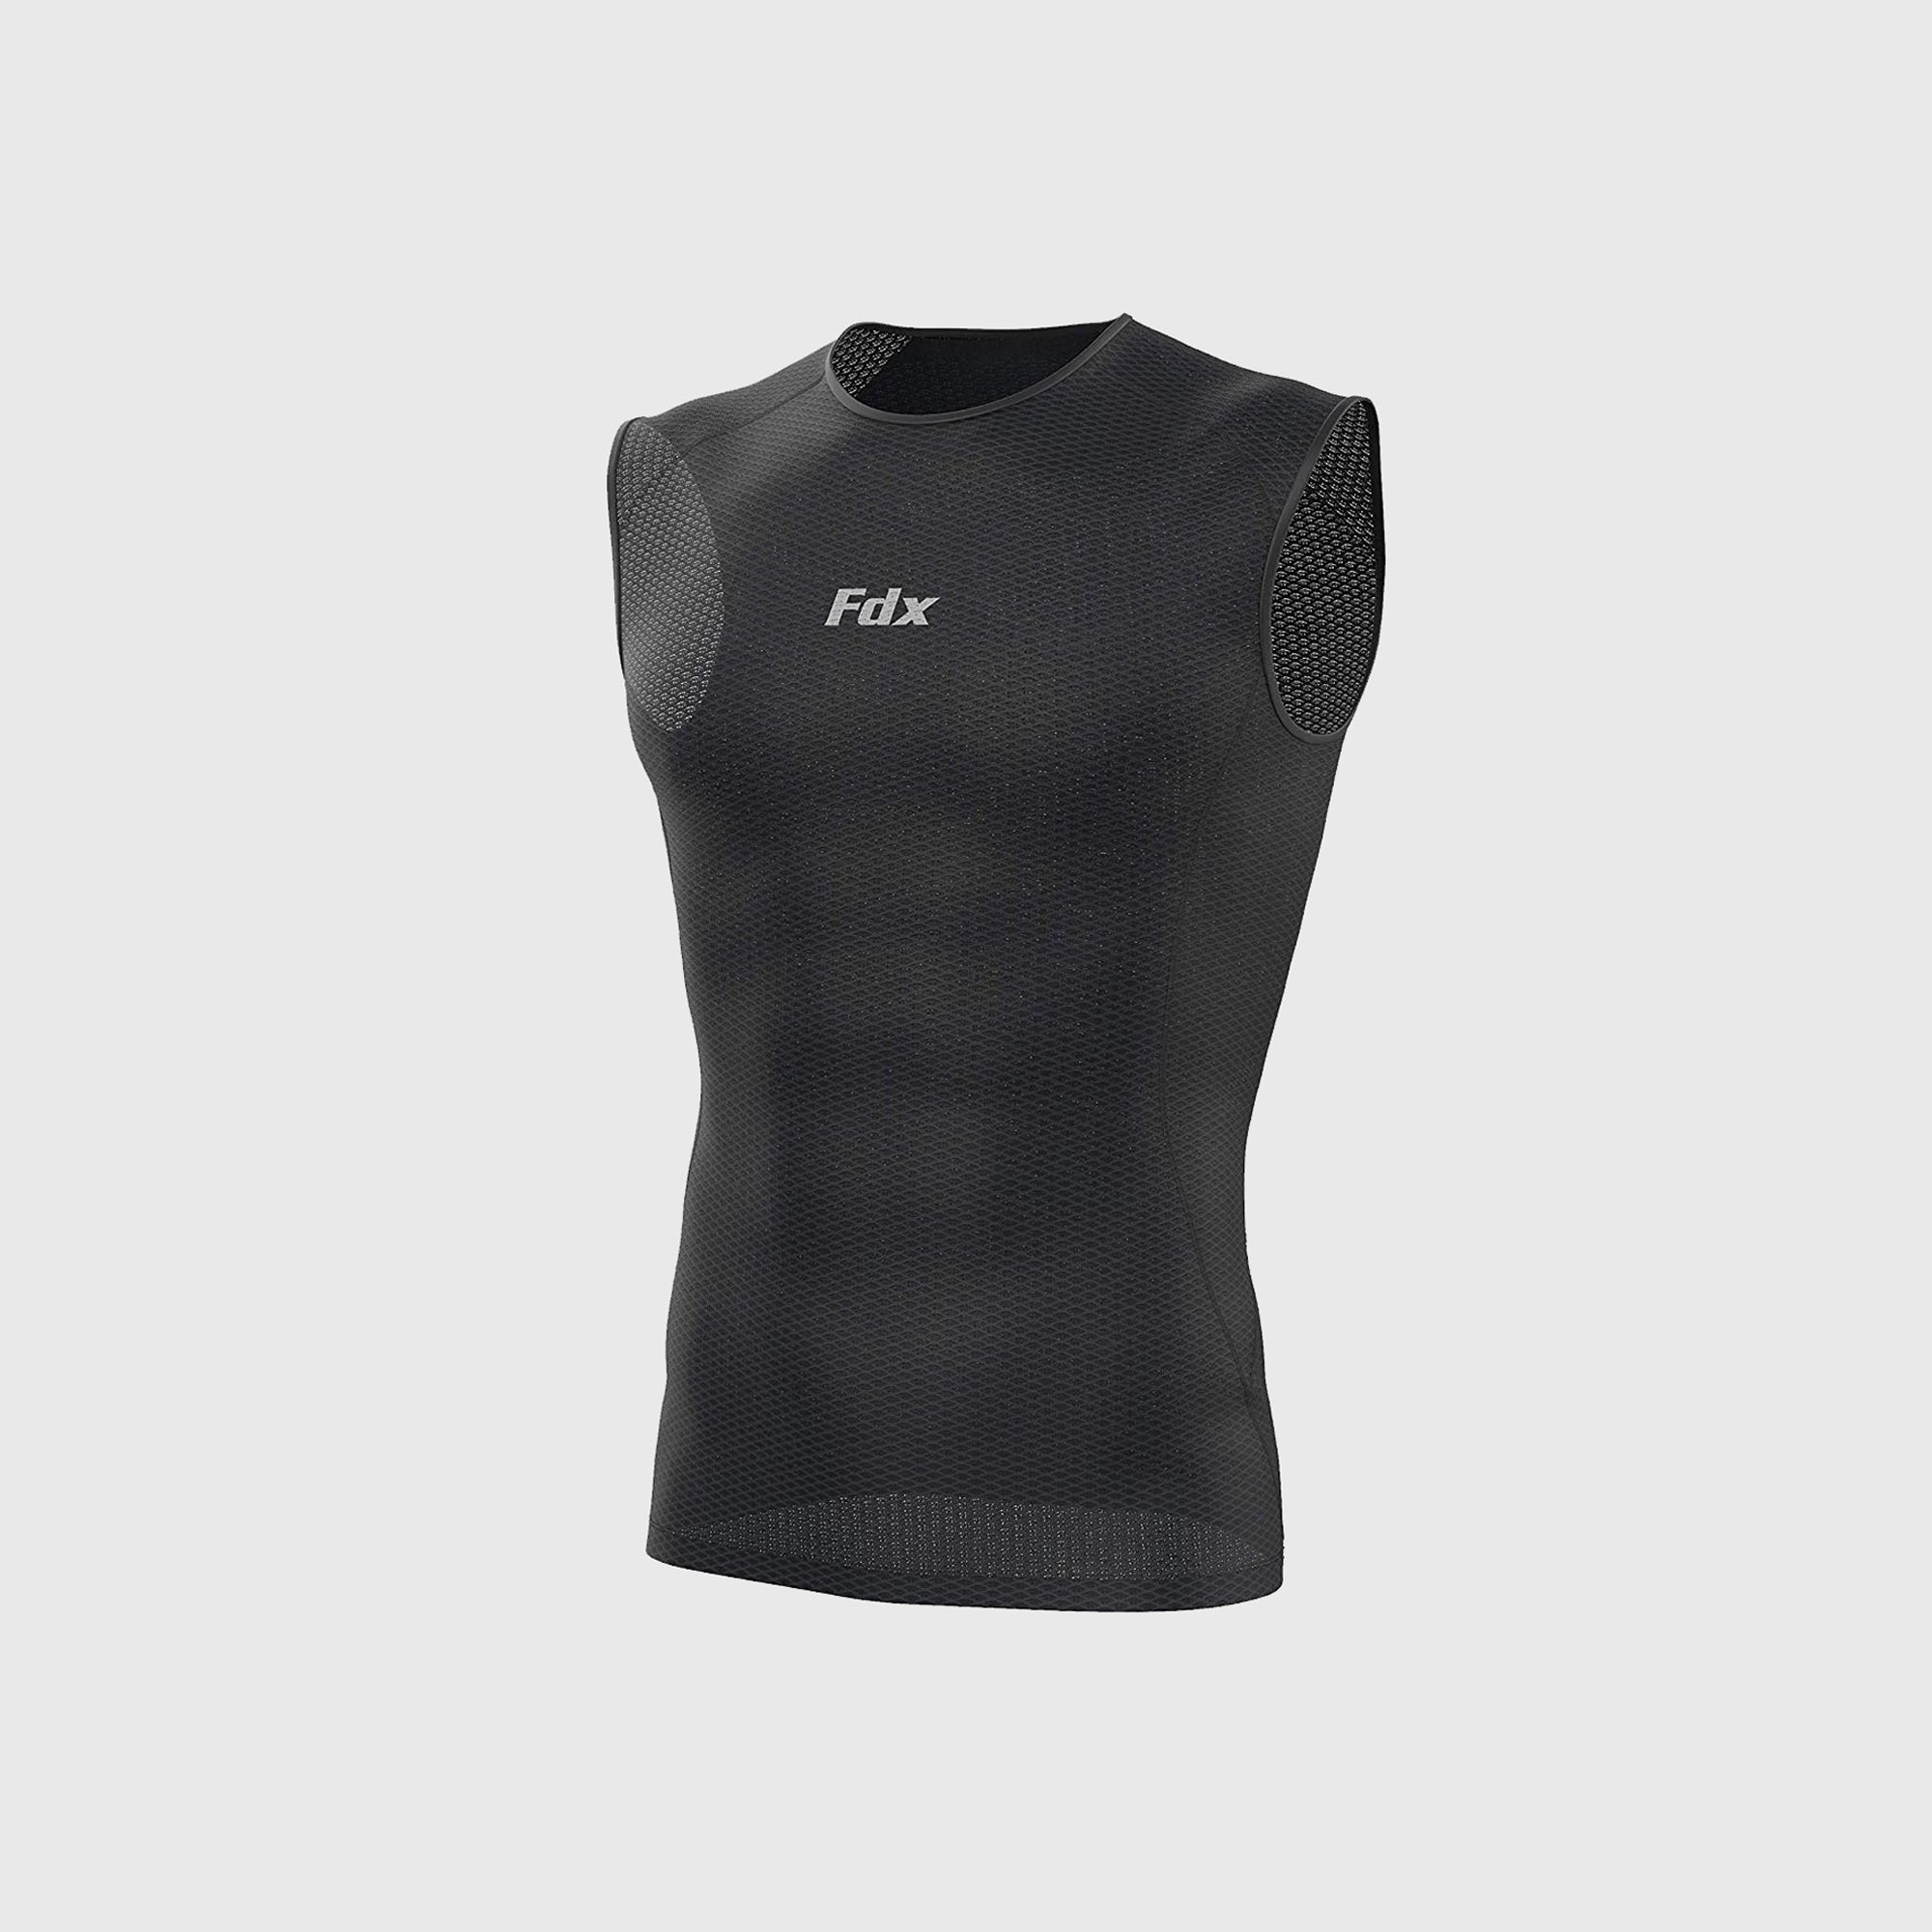 Fdx Mens Black  Sleeveless Mesh Compression Top Running Gym Workout Wear Rash Guard Stretchable Breathable - Aeroform